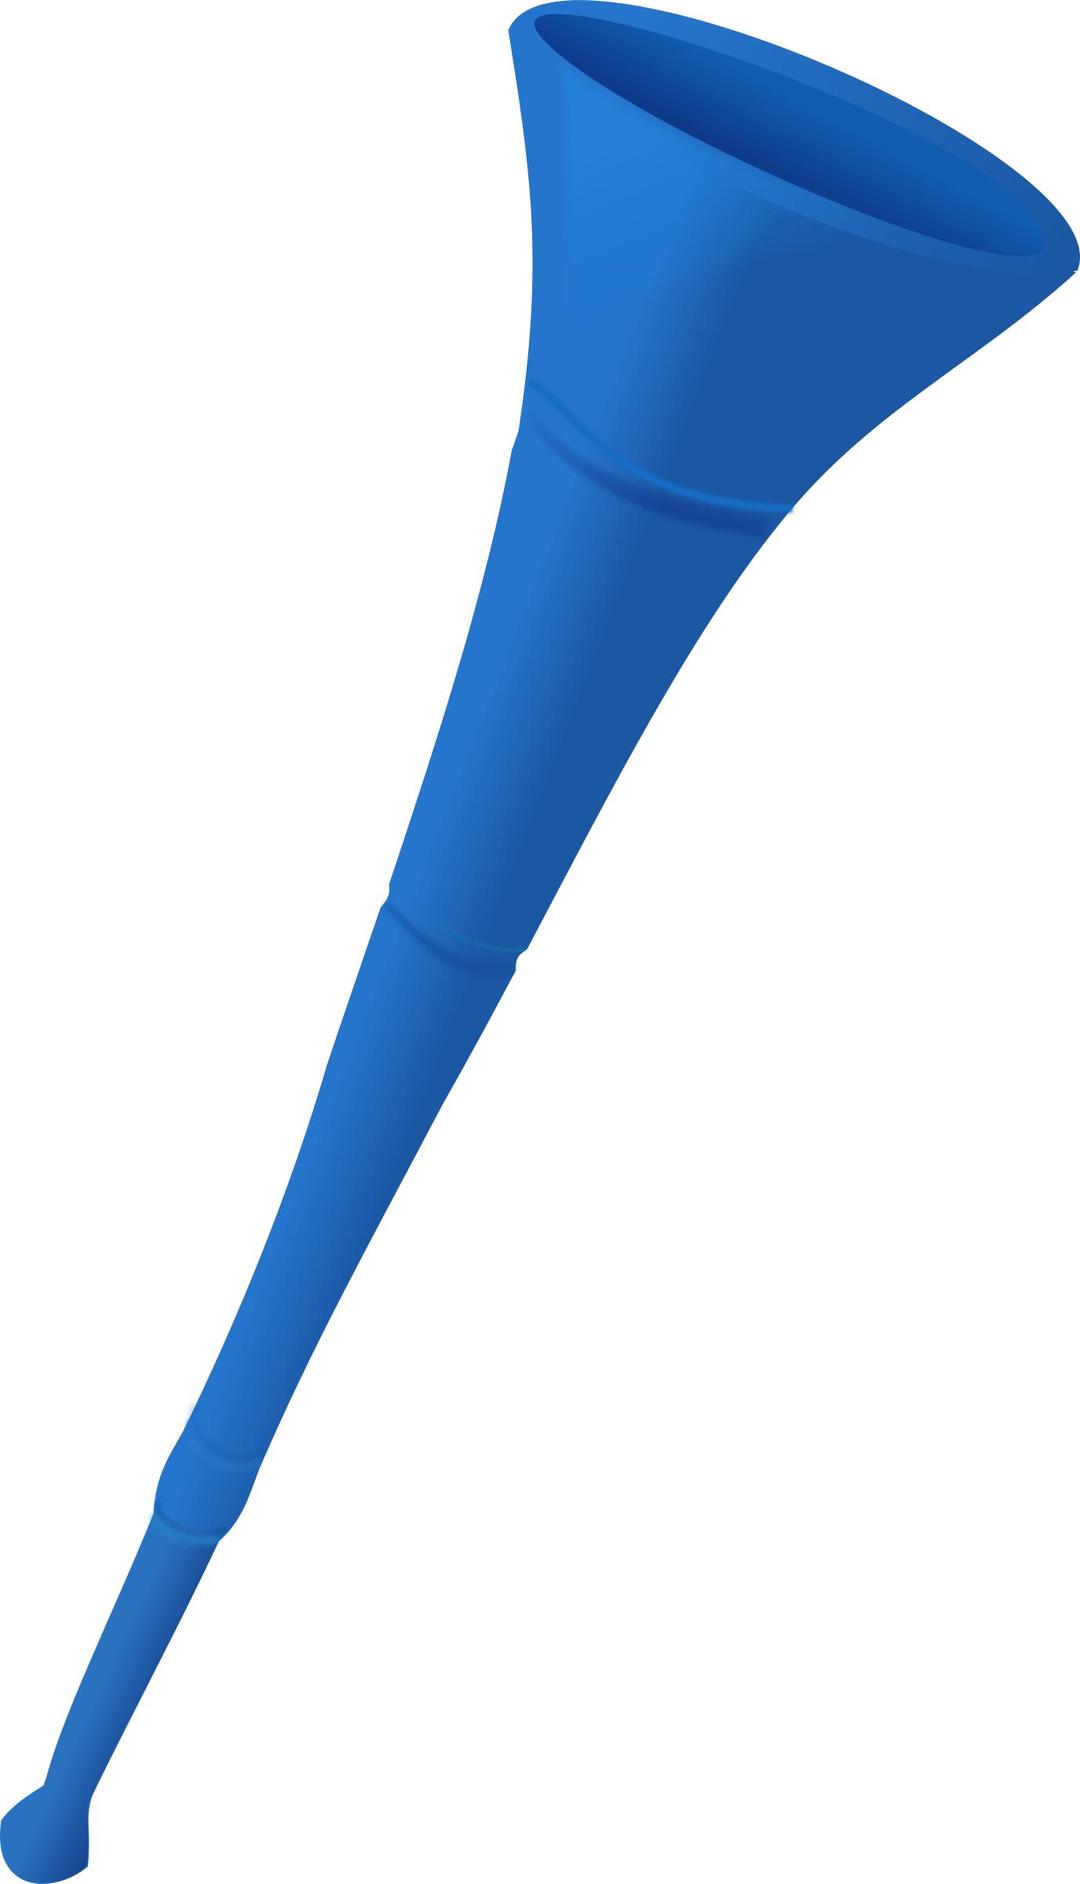 Blue Vuvuzela png transparent